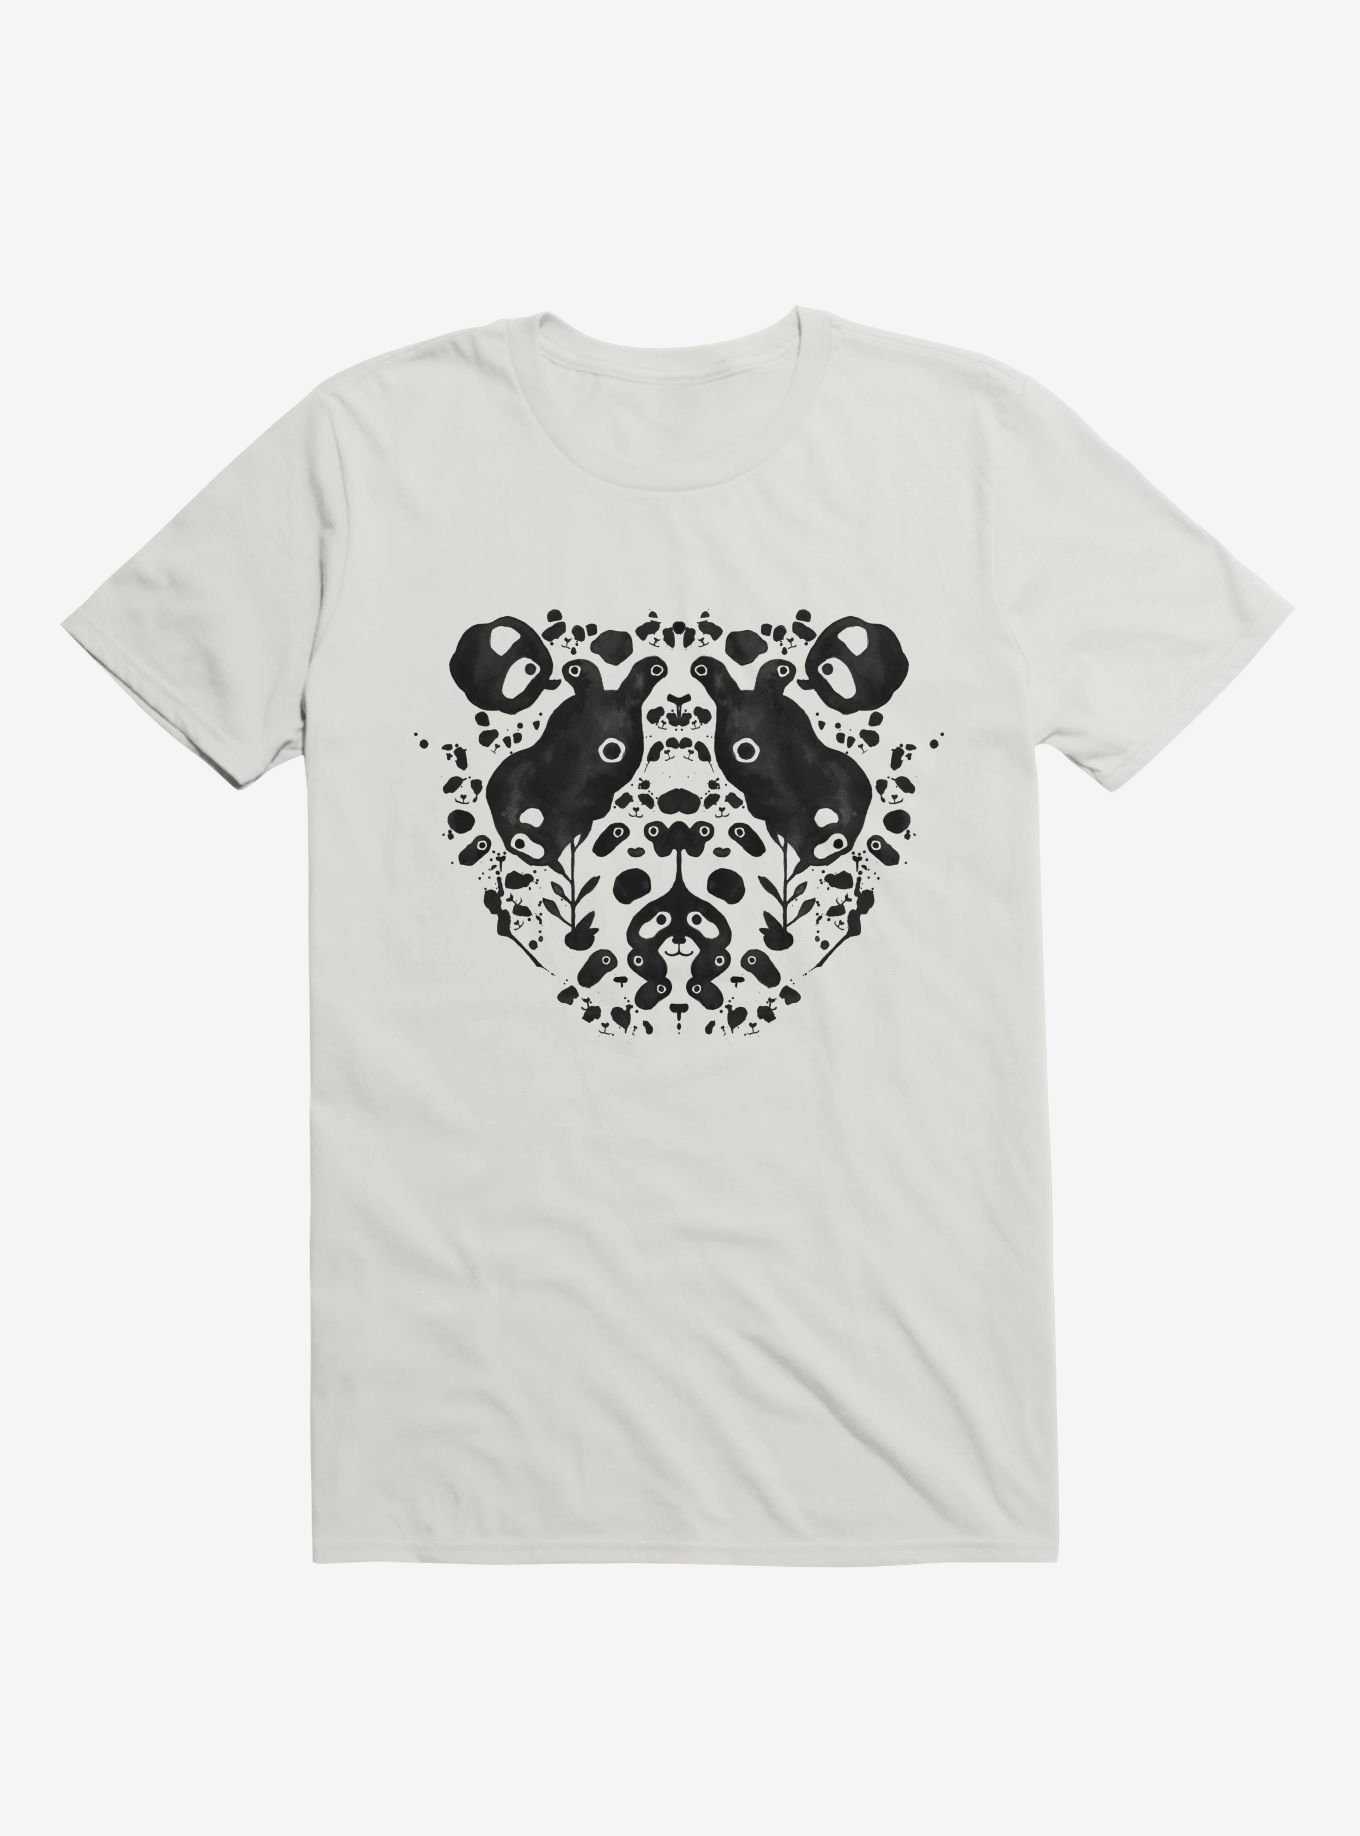 Rorschach Panda T-Shirt, , hi-res